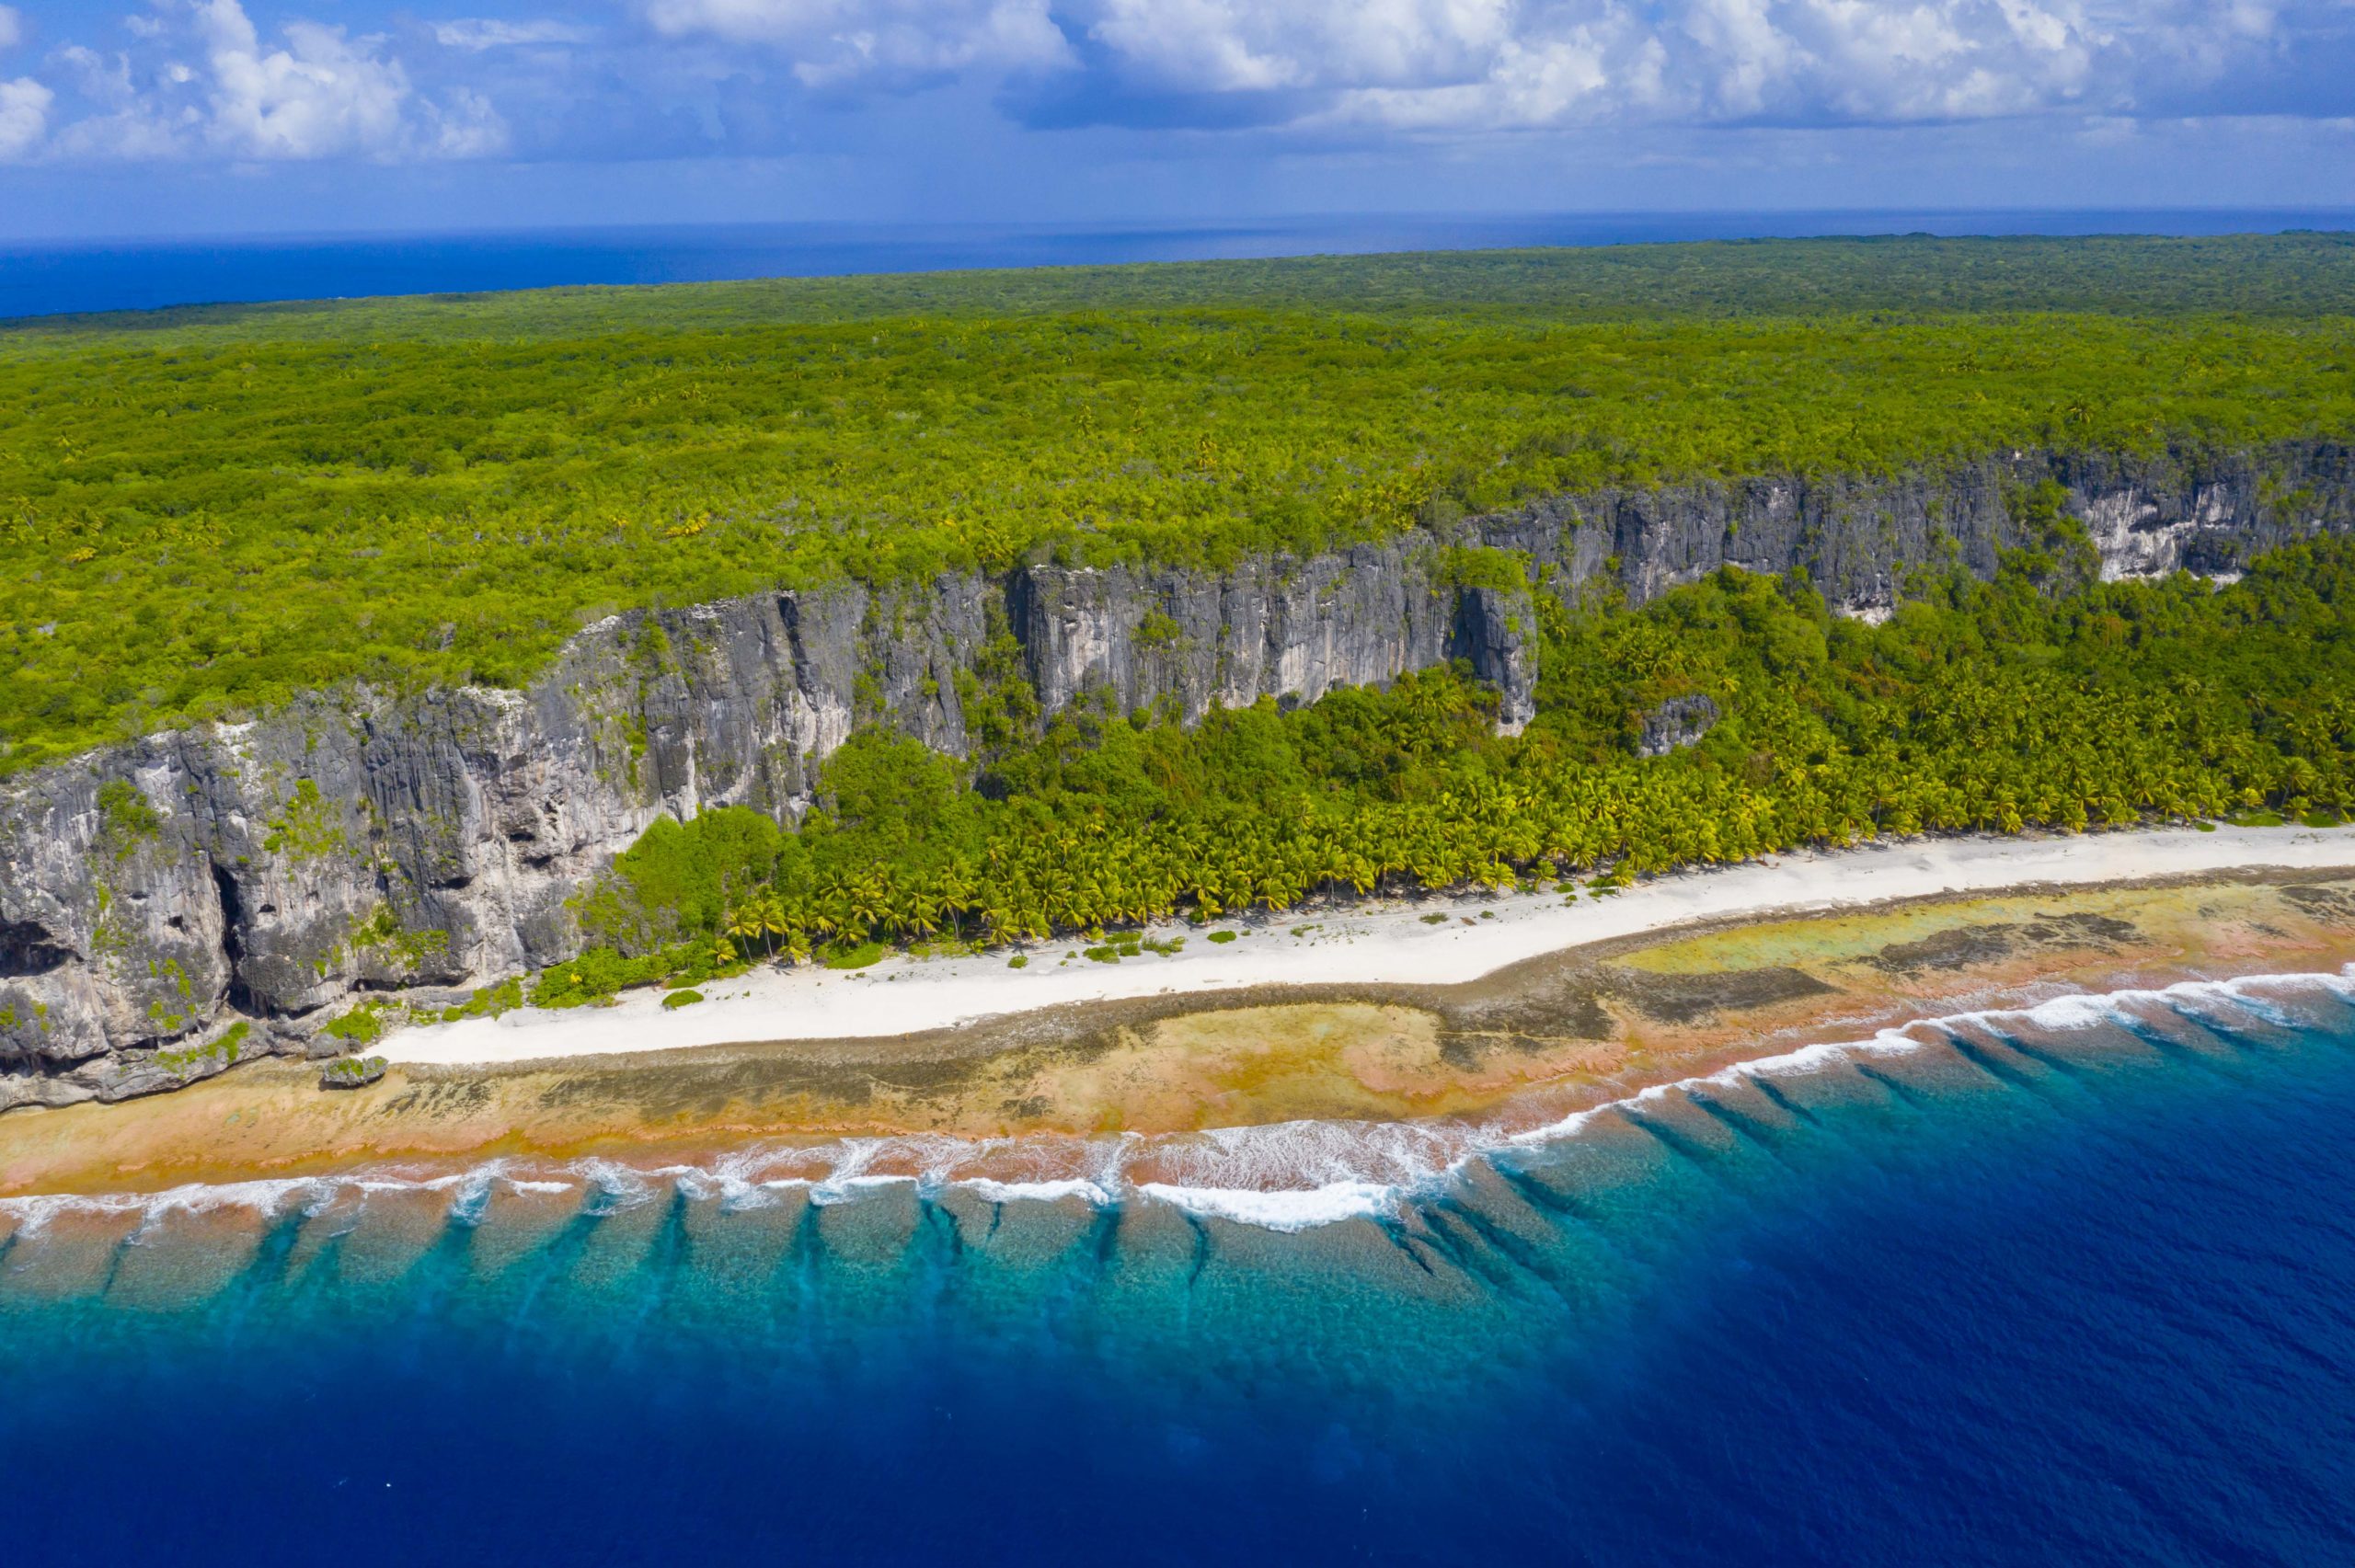 tuamotu atolls